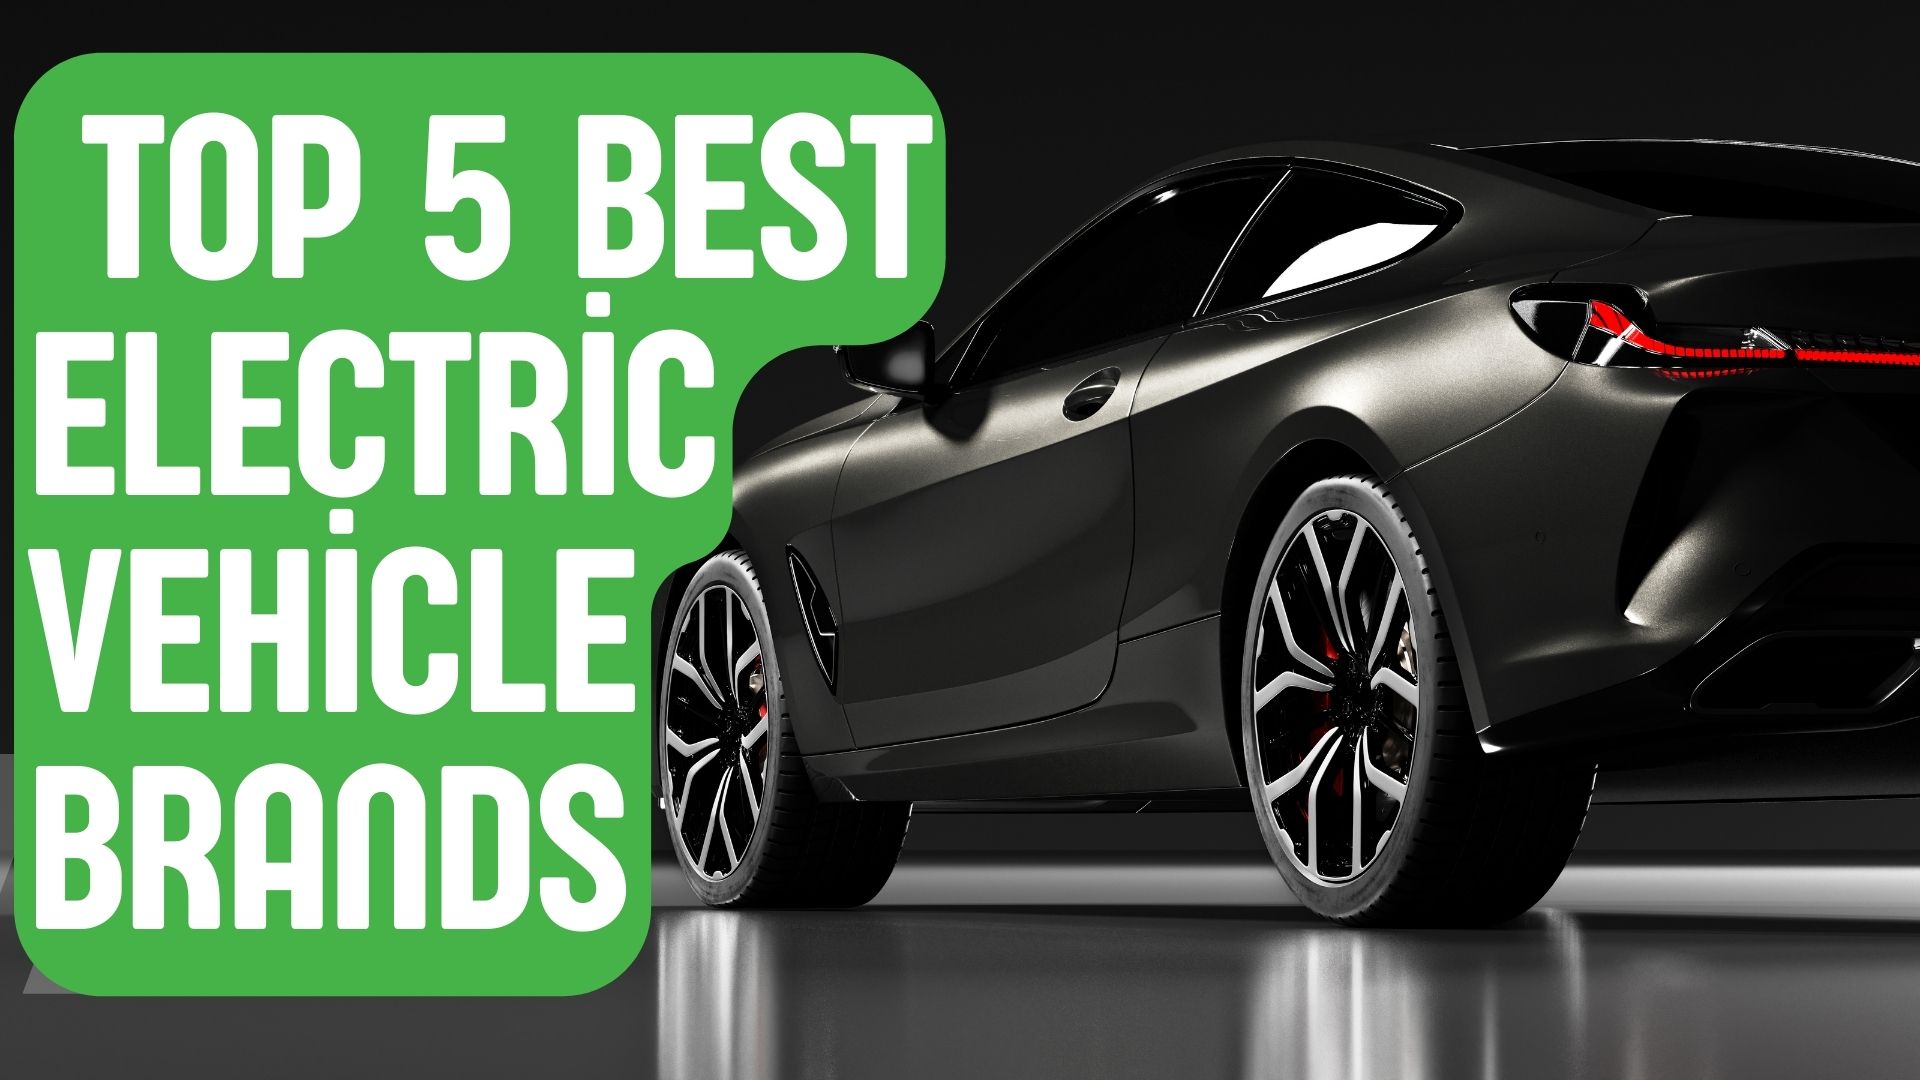 Top 5 Best Electric Vehicle Brands